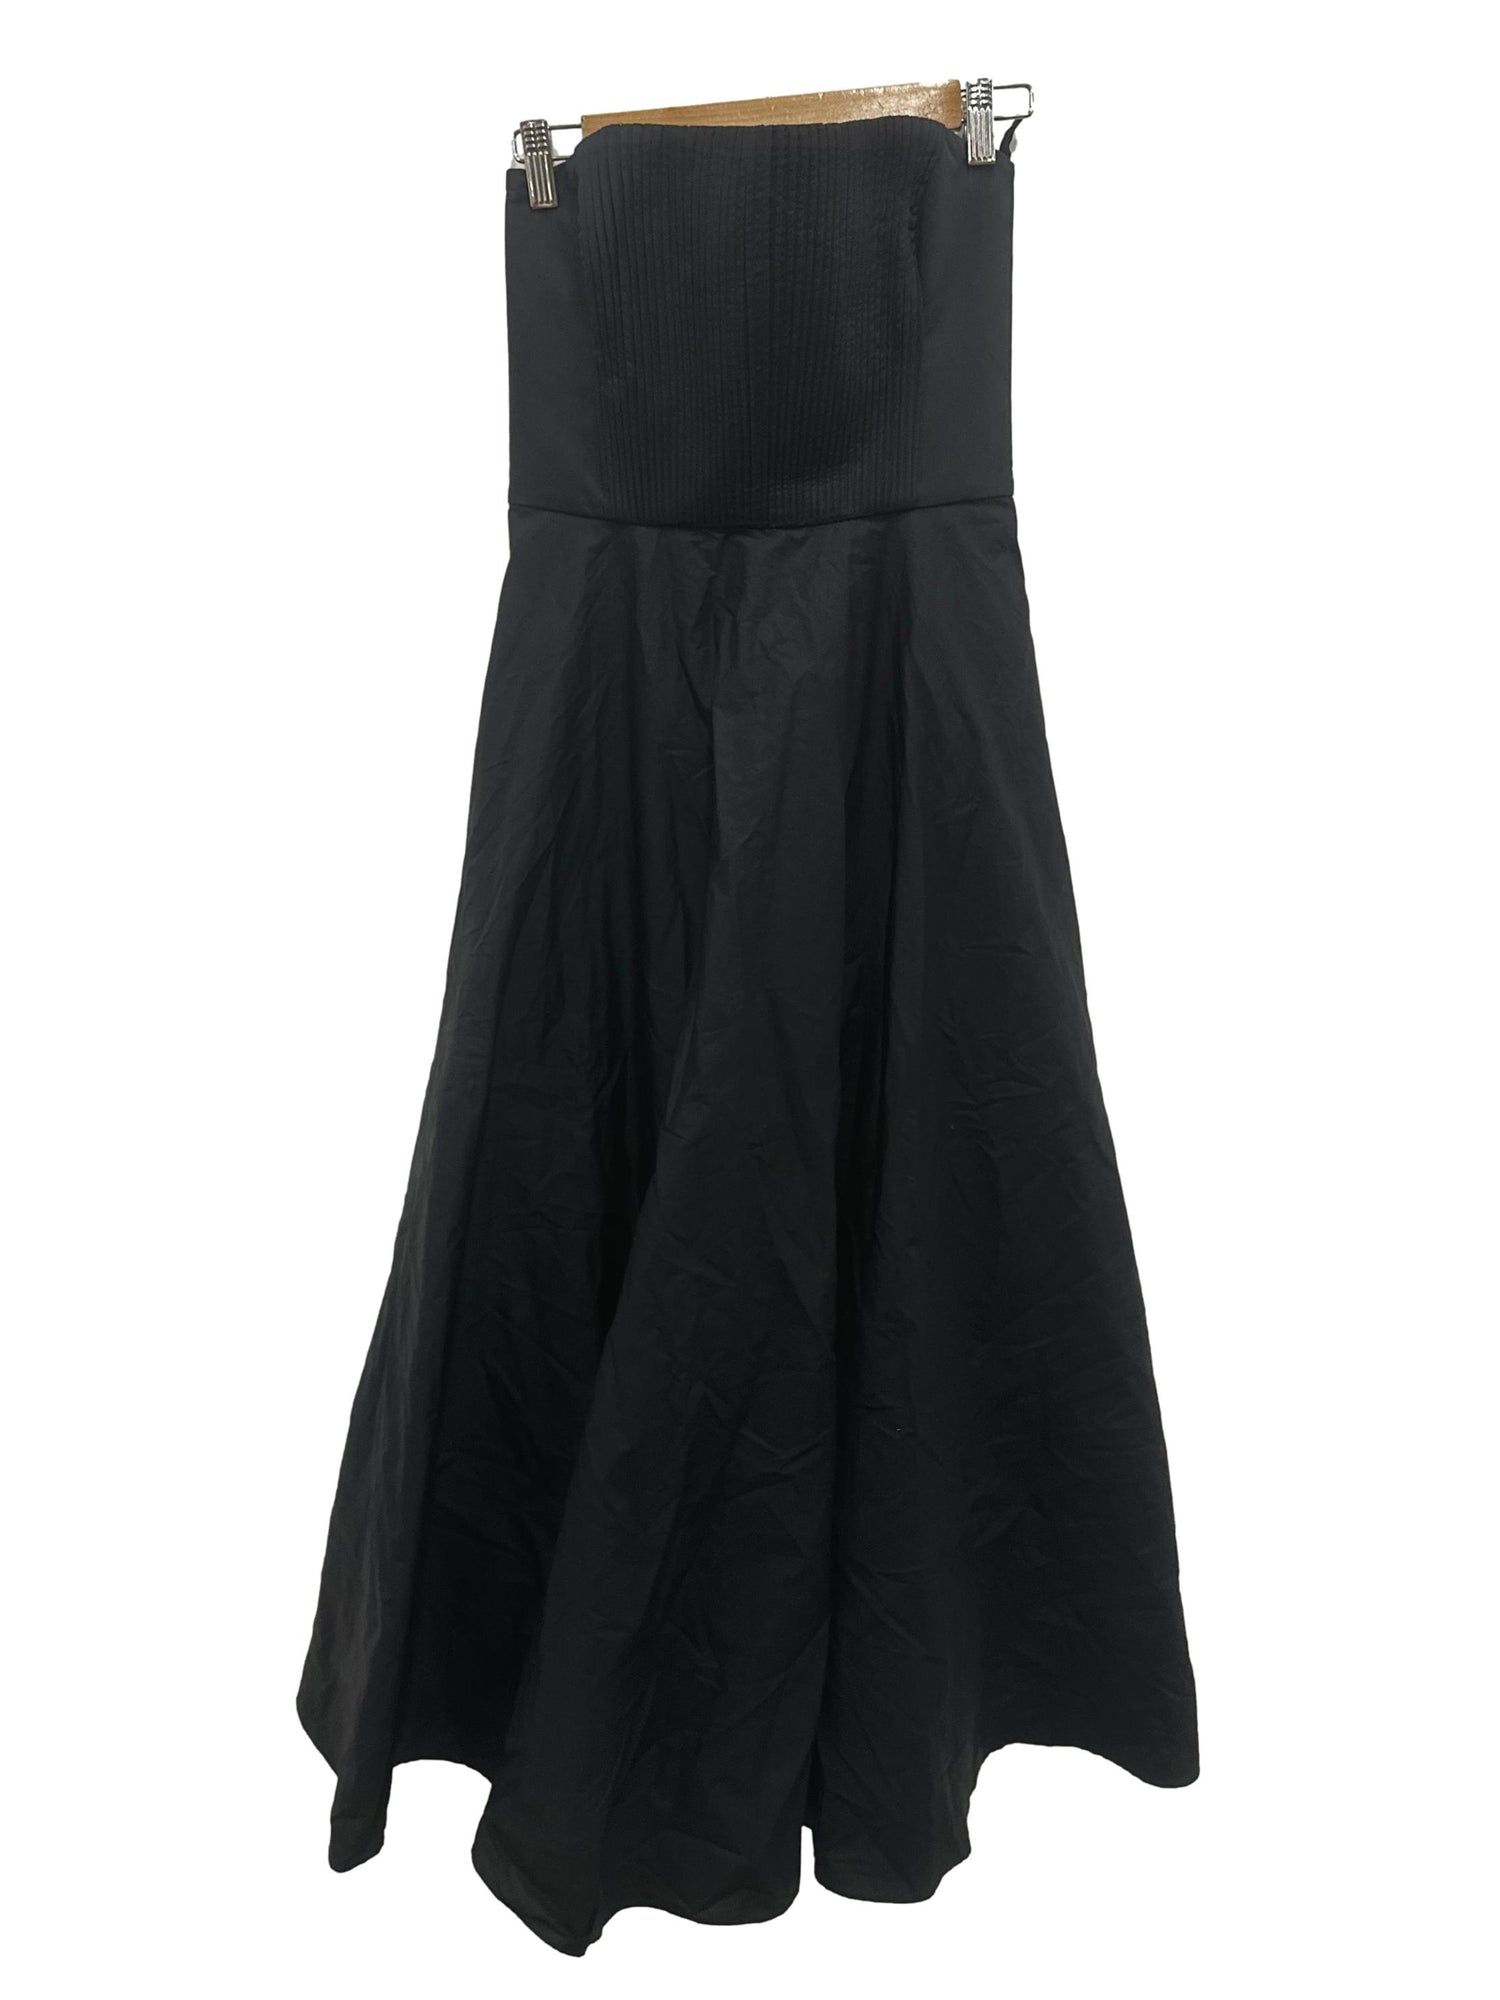 Scanlan Theodore Black Parachute Bustier Dress, Women's Fashion